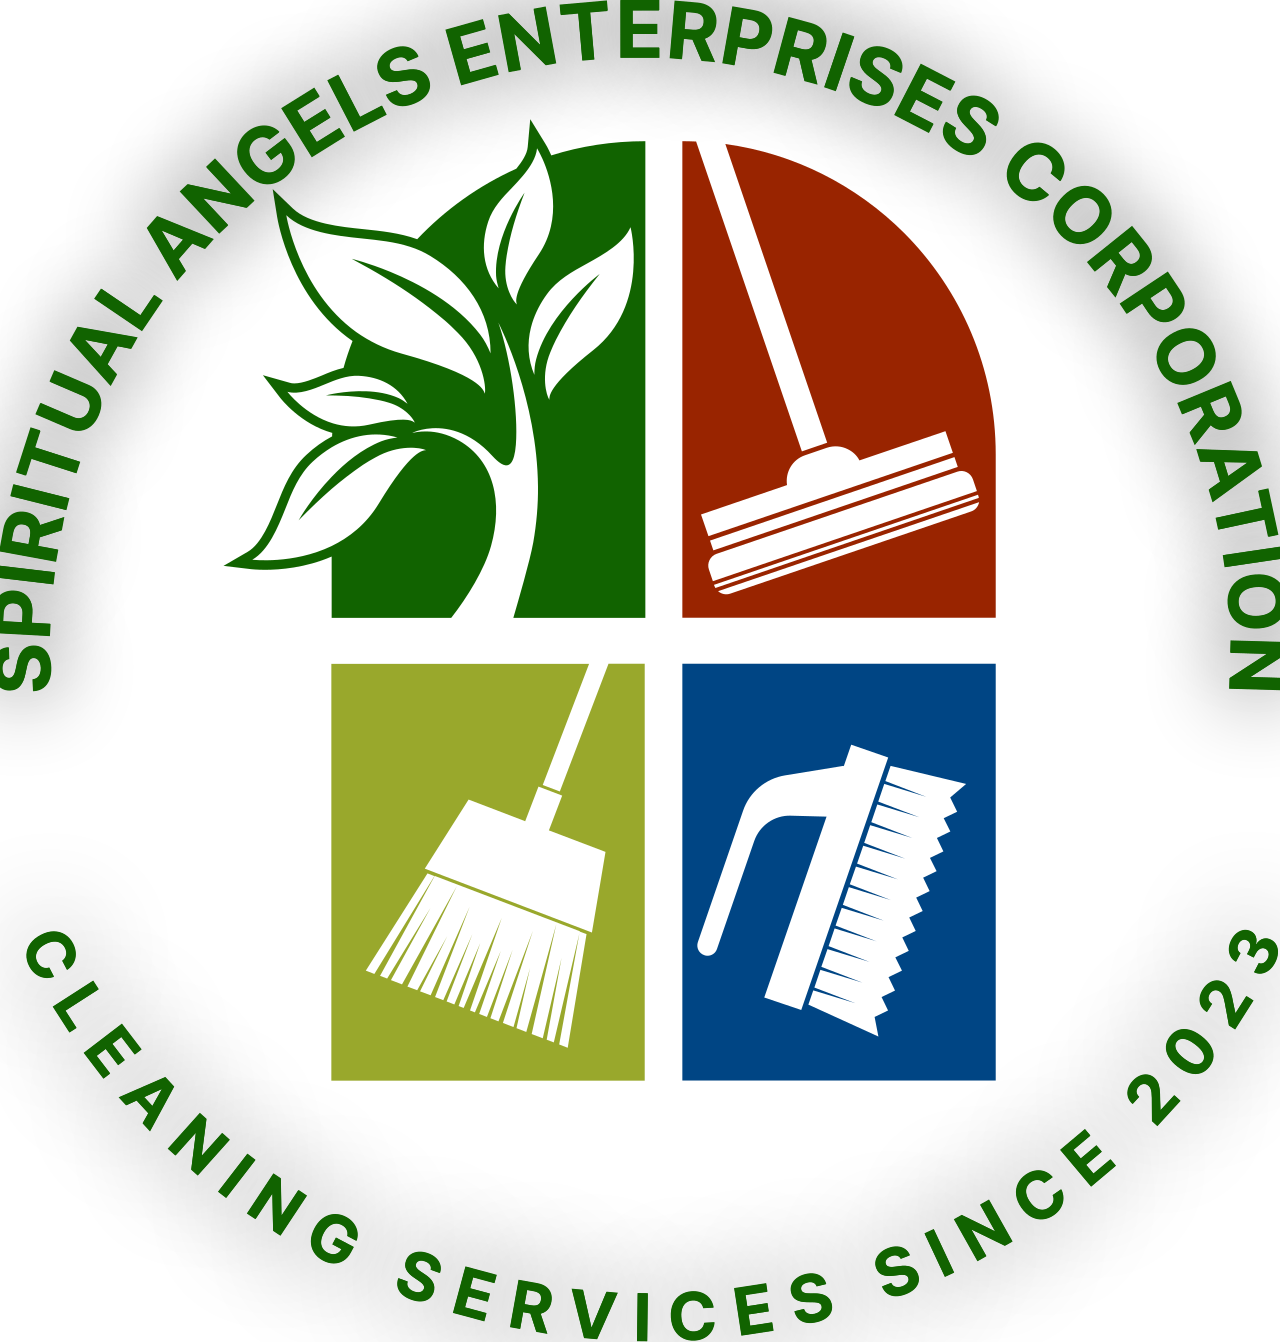 Spiritual Angels Enterprises Corporation's logo